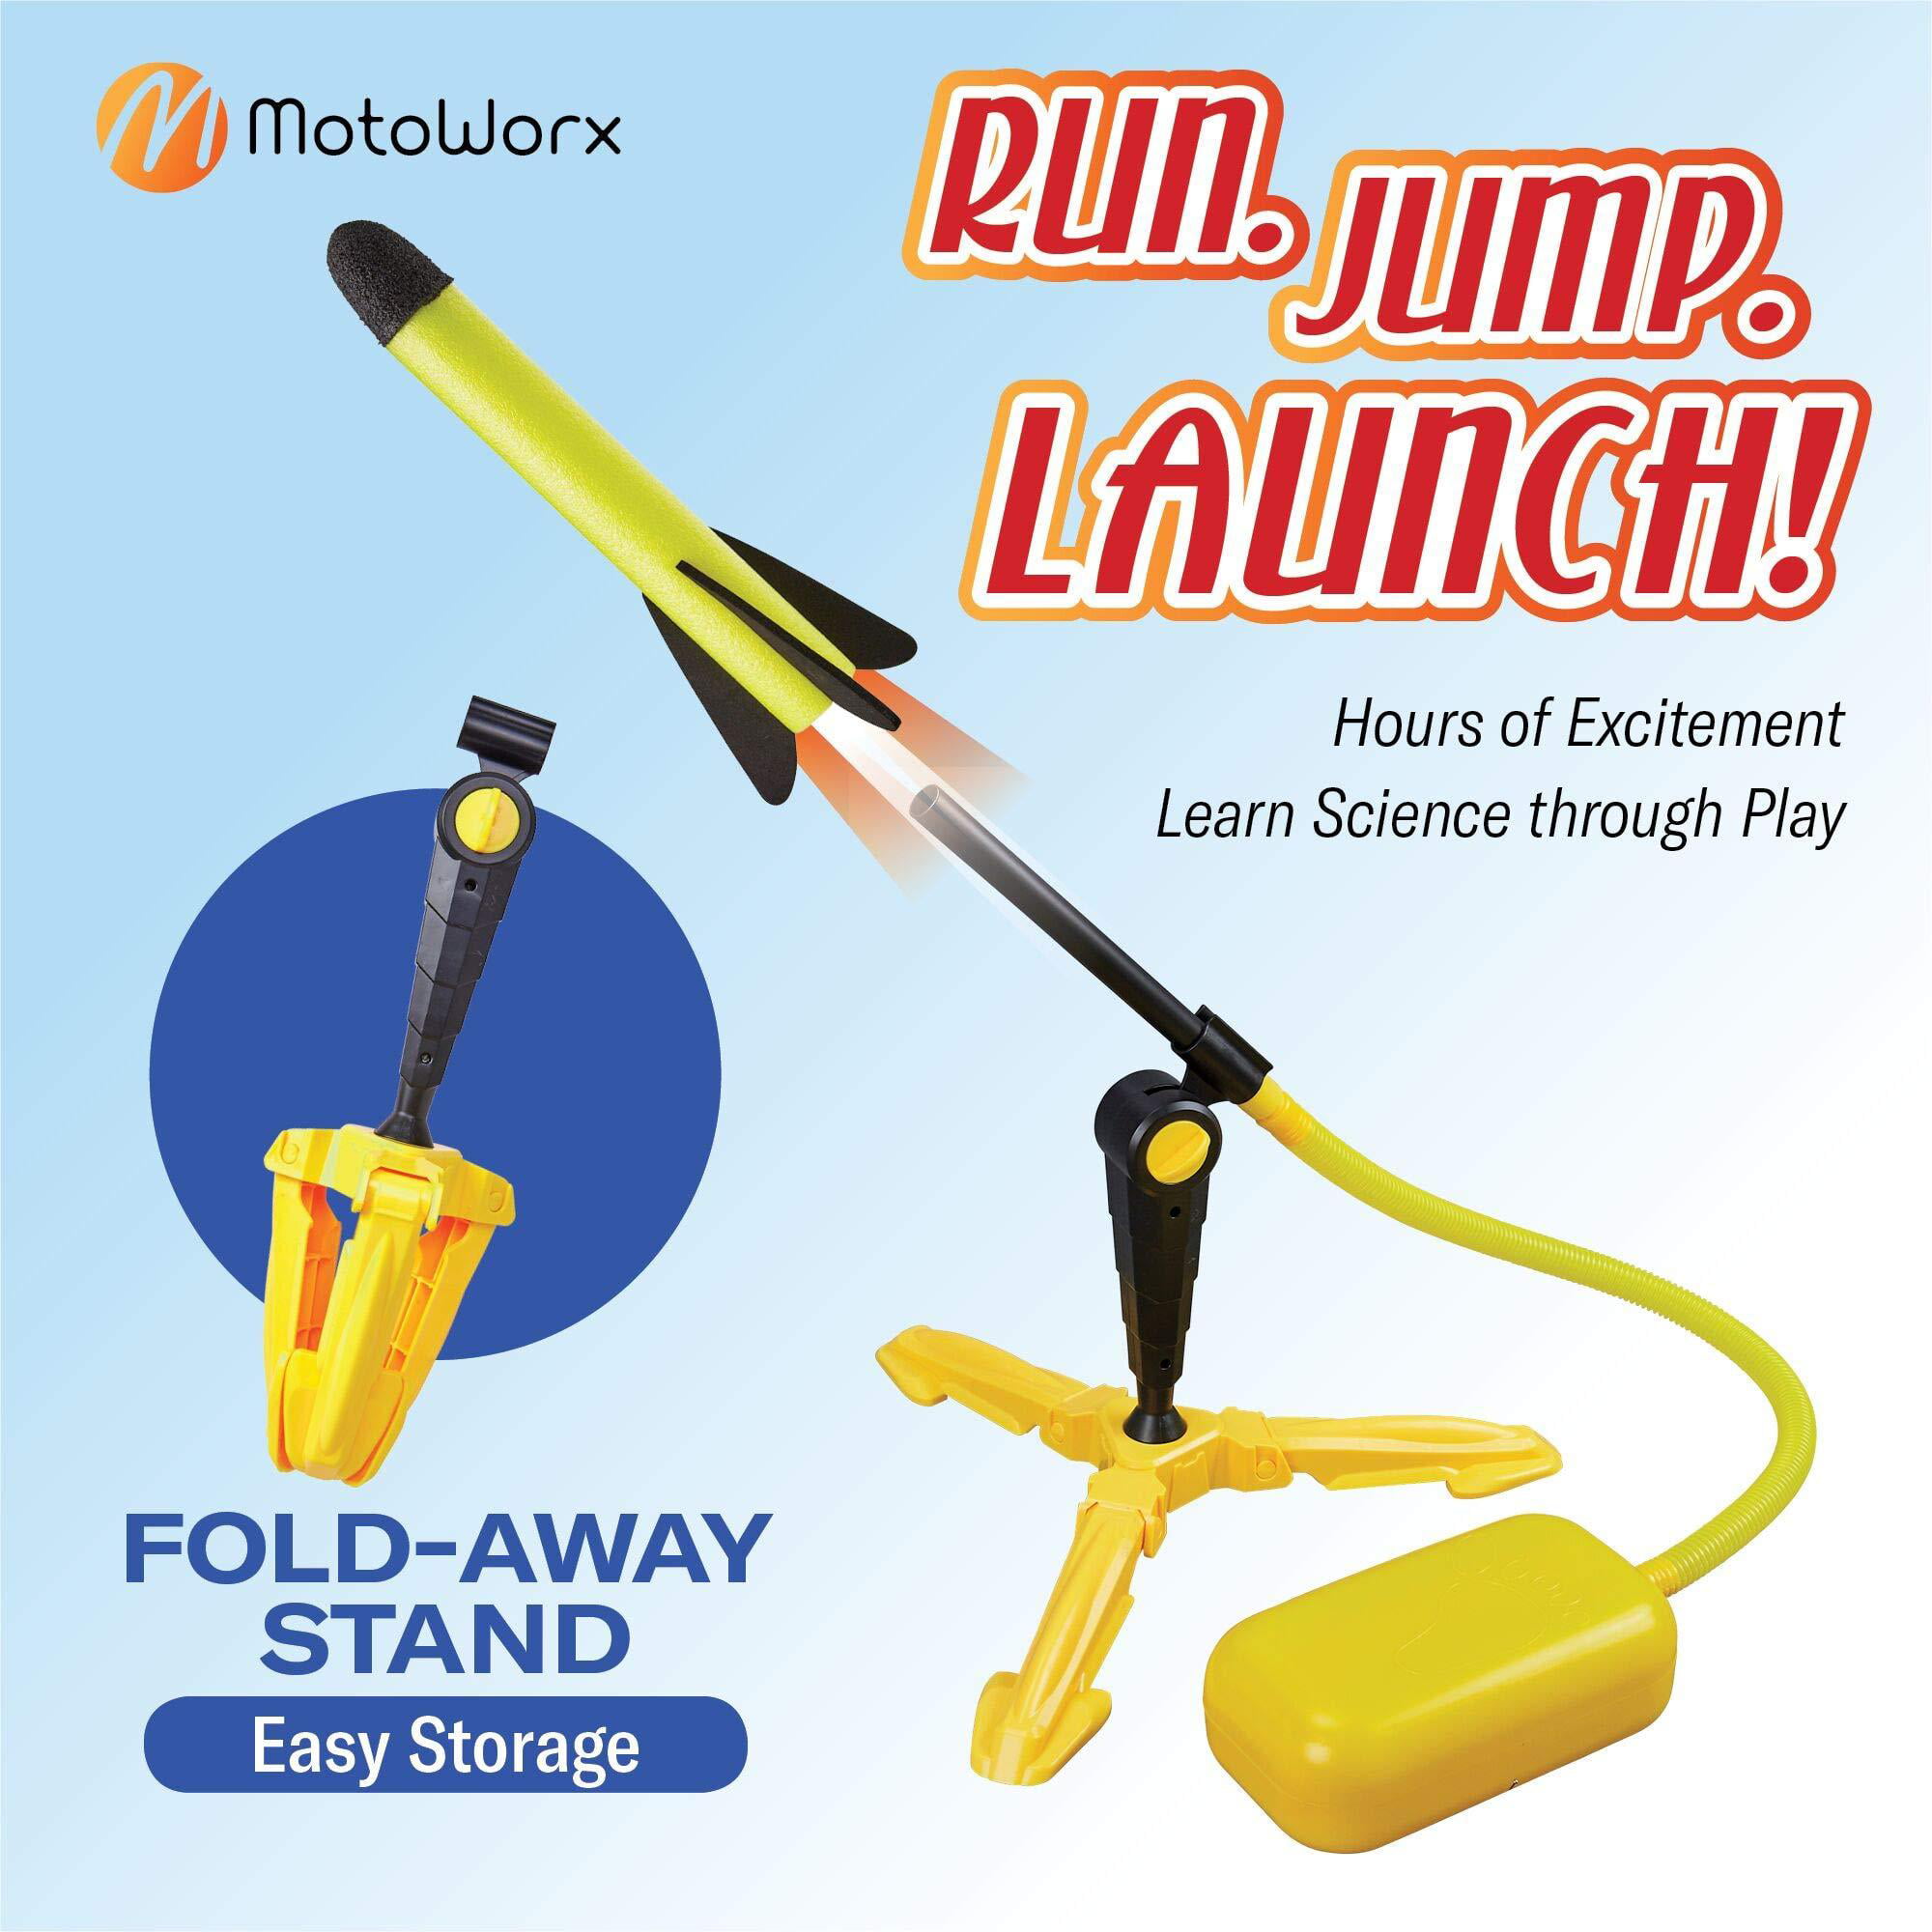 Motoworx Rocket Launcher Toy for sale online